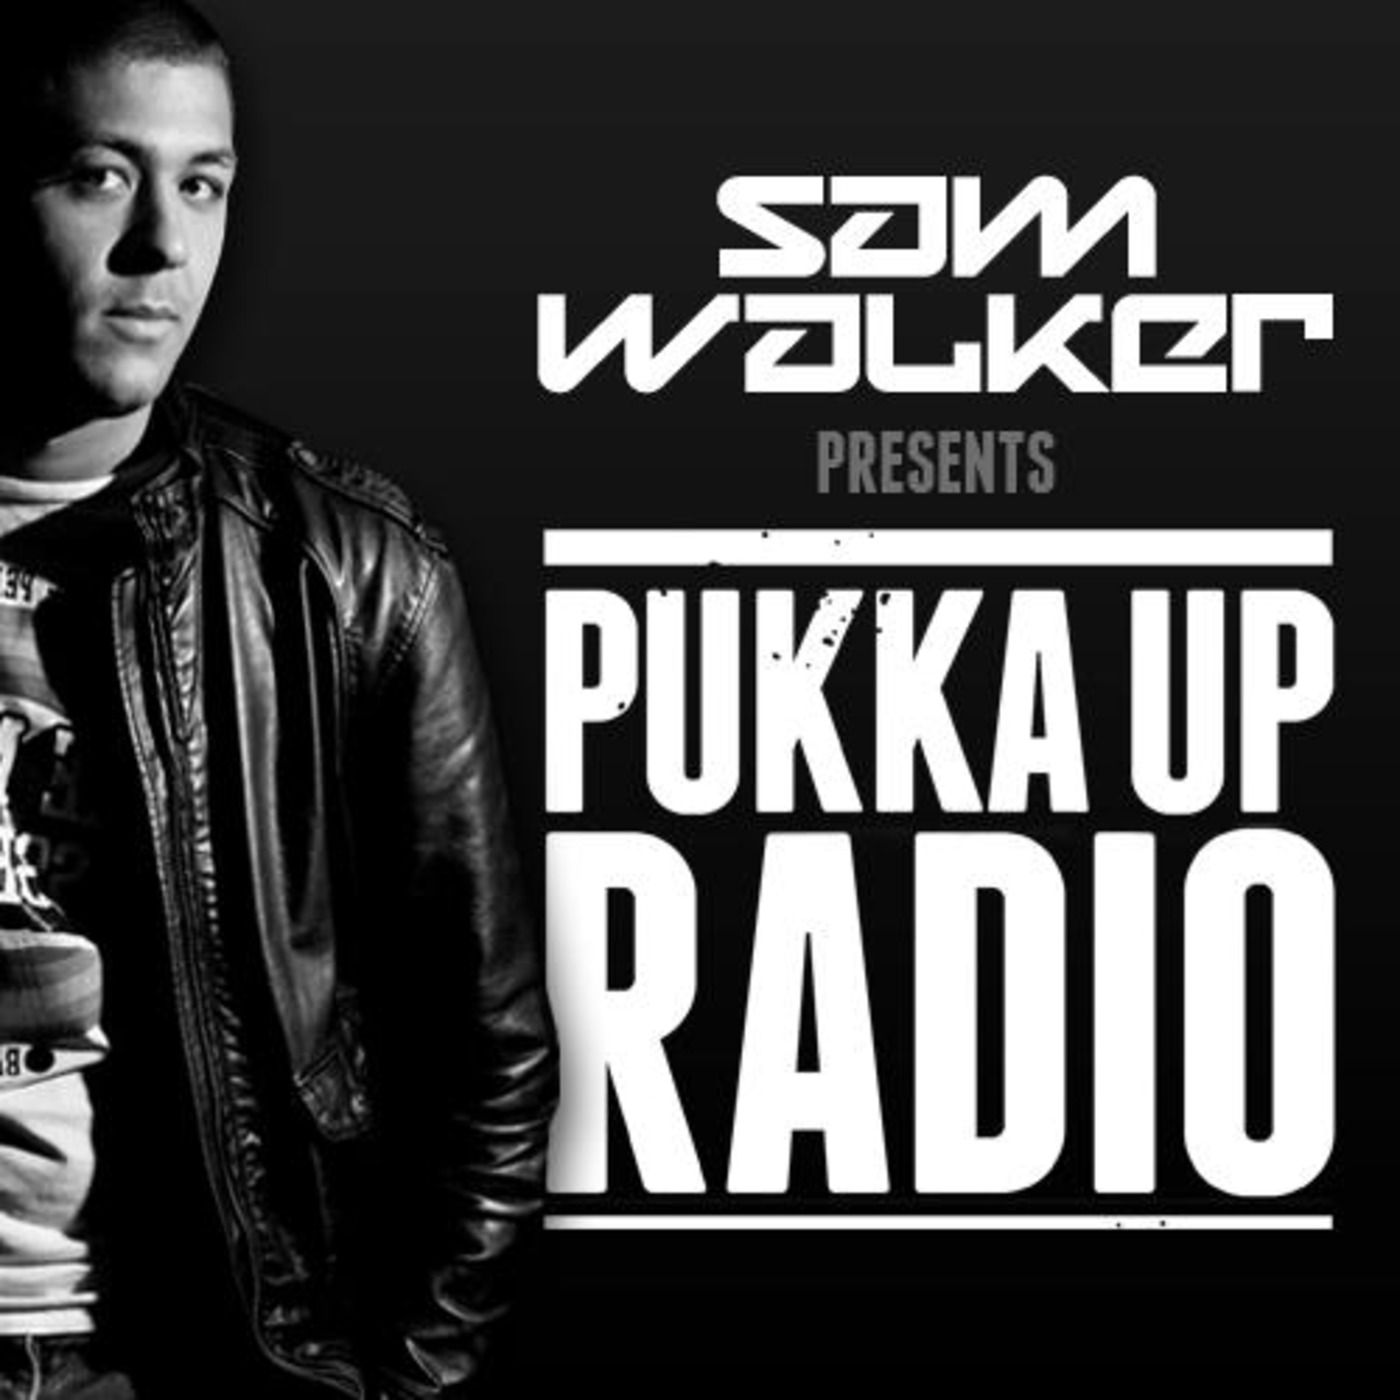 050 SAM WALKER presents PUKKA UP RADIO